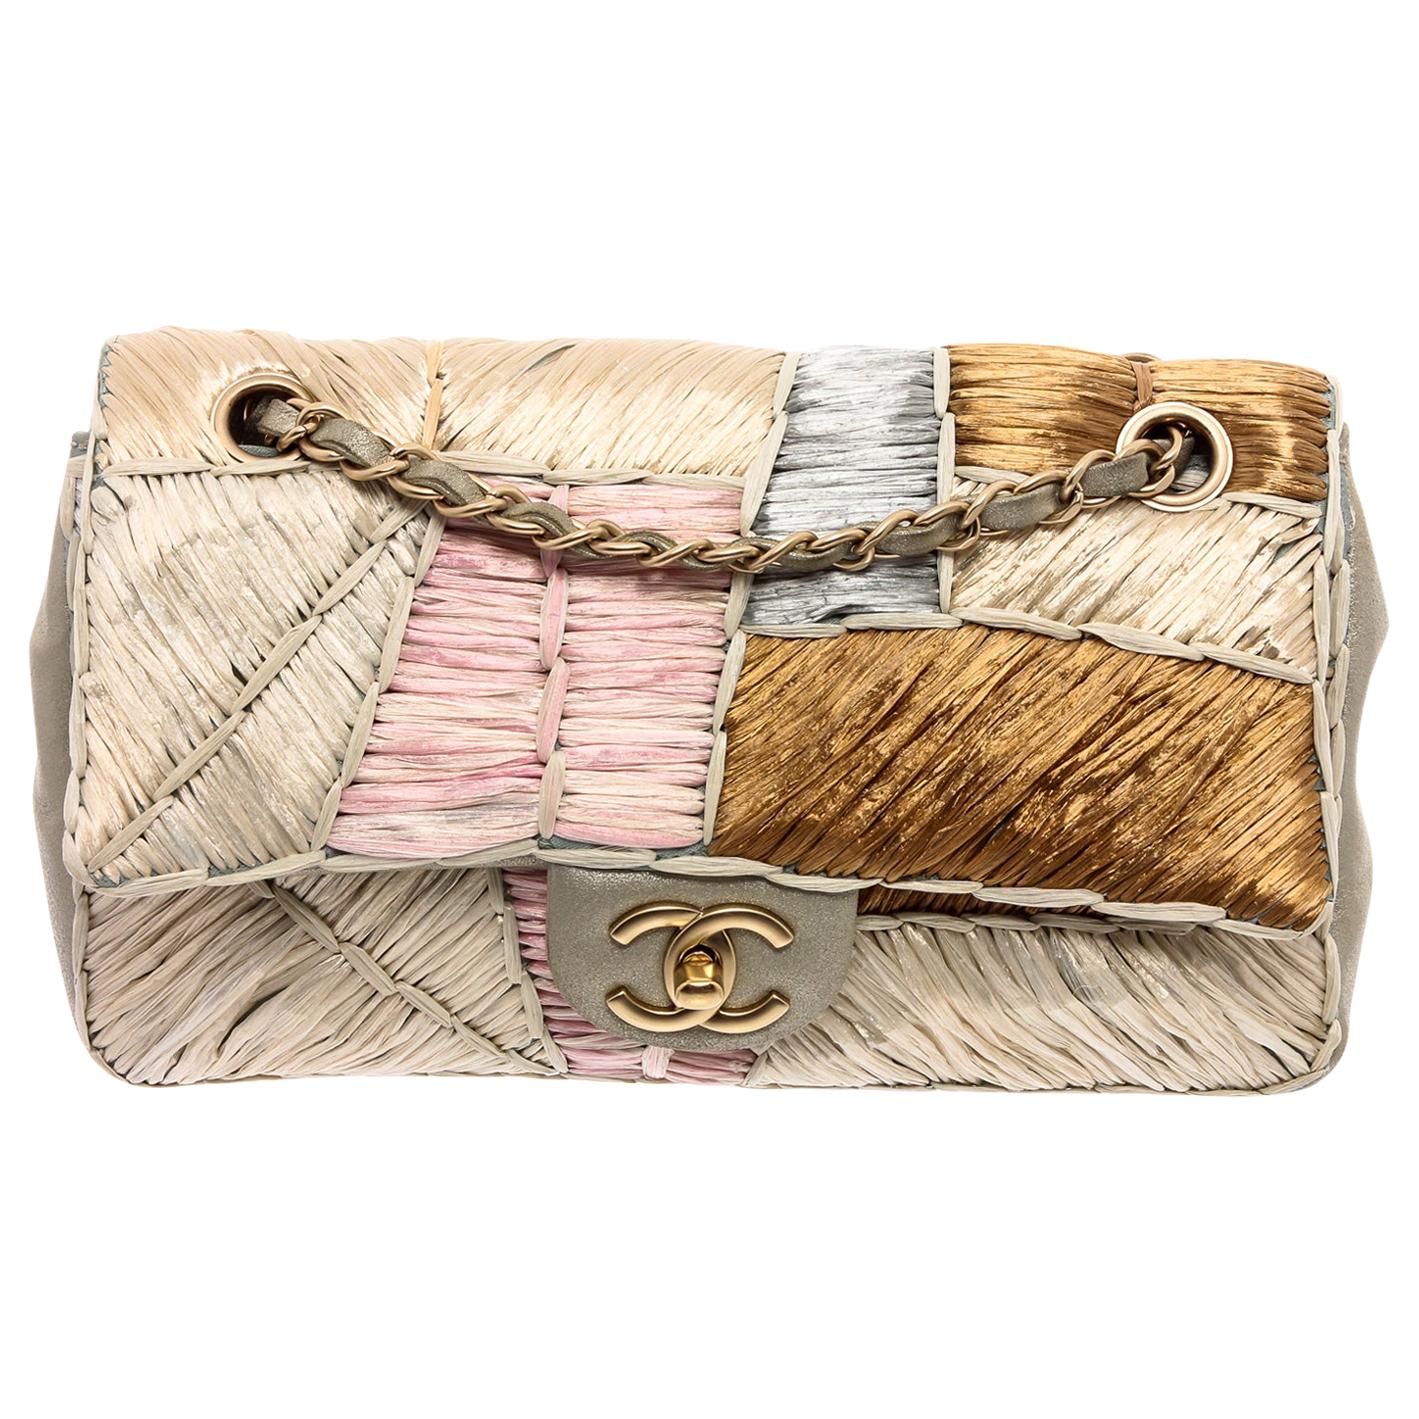 Sold at Auction: Chanel Multi-Color Suede Patchwork Flap Bag